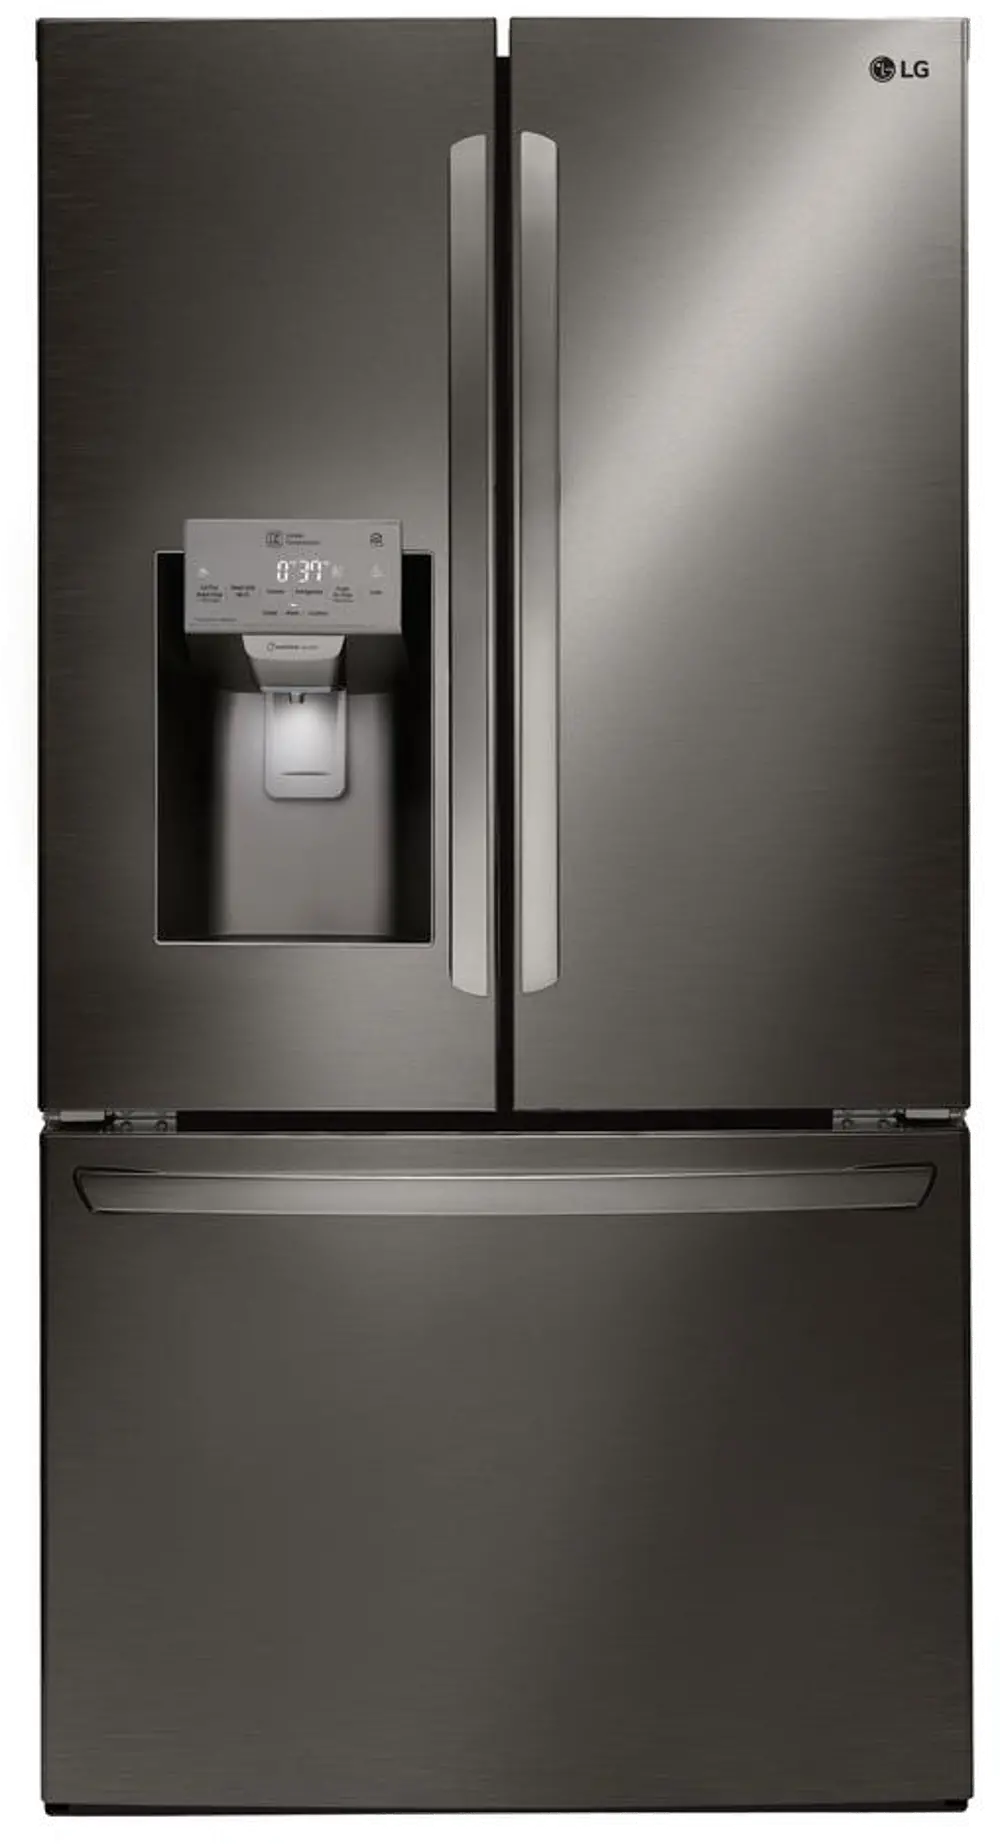 LFXS28968D LG 27.9 cu ft French Door Refrigerator - Black Stainless Steel-1